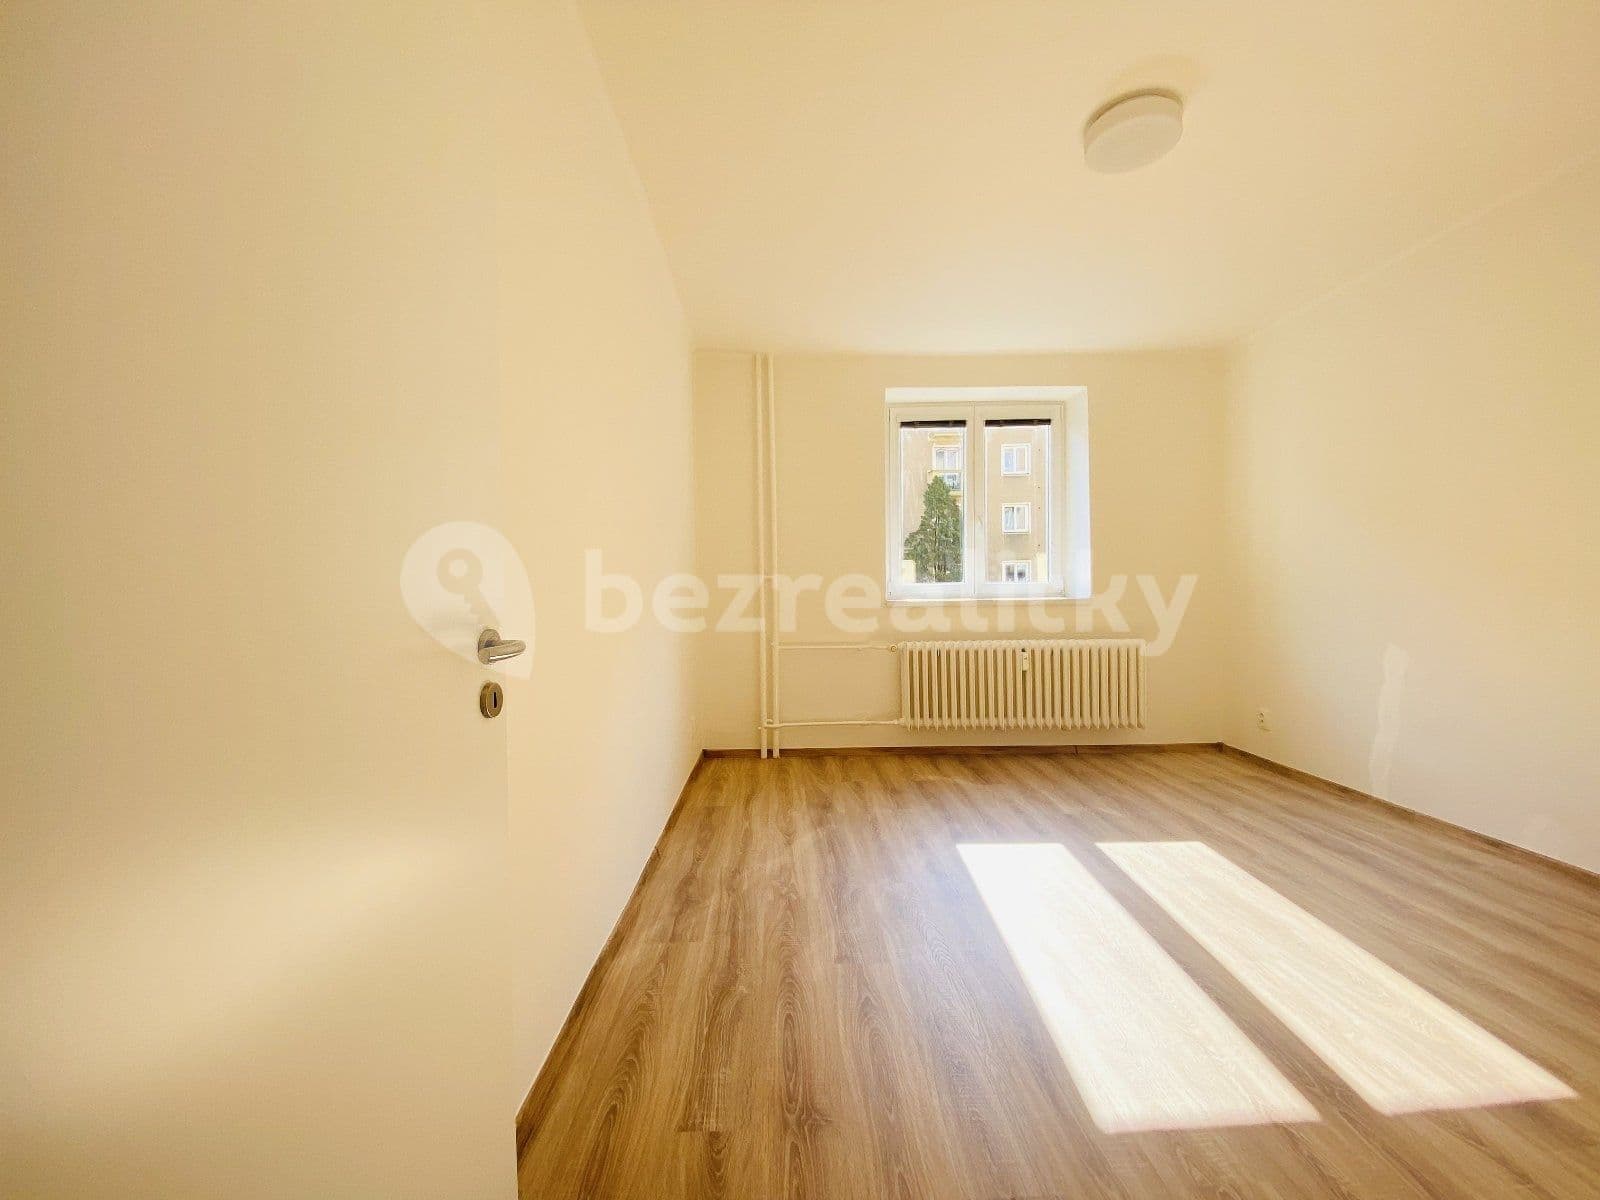 2 bedroom flat to rent, 56 m², Opletalova, Ostrava, Moravskoslezský Region